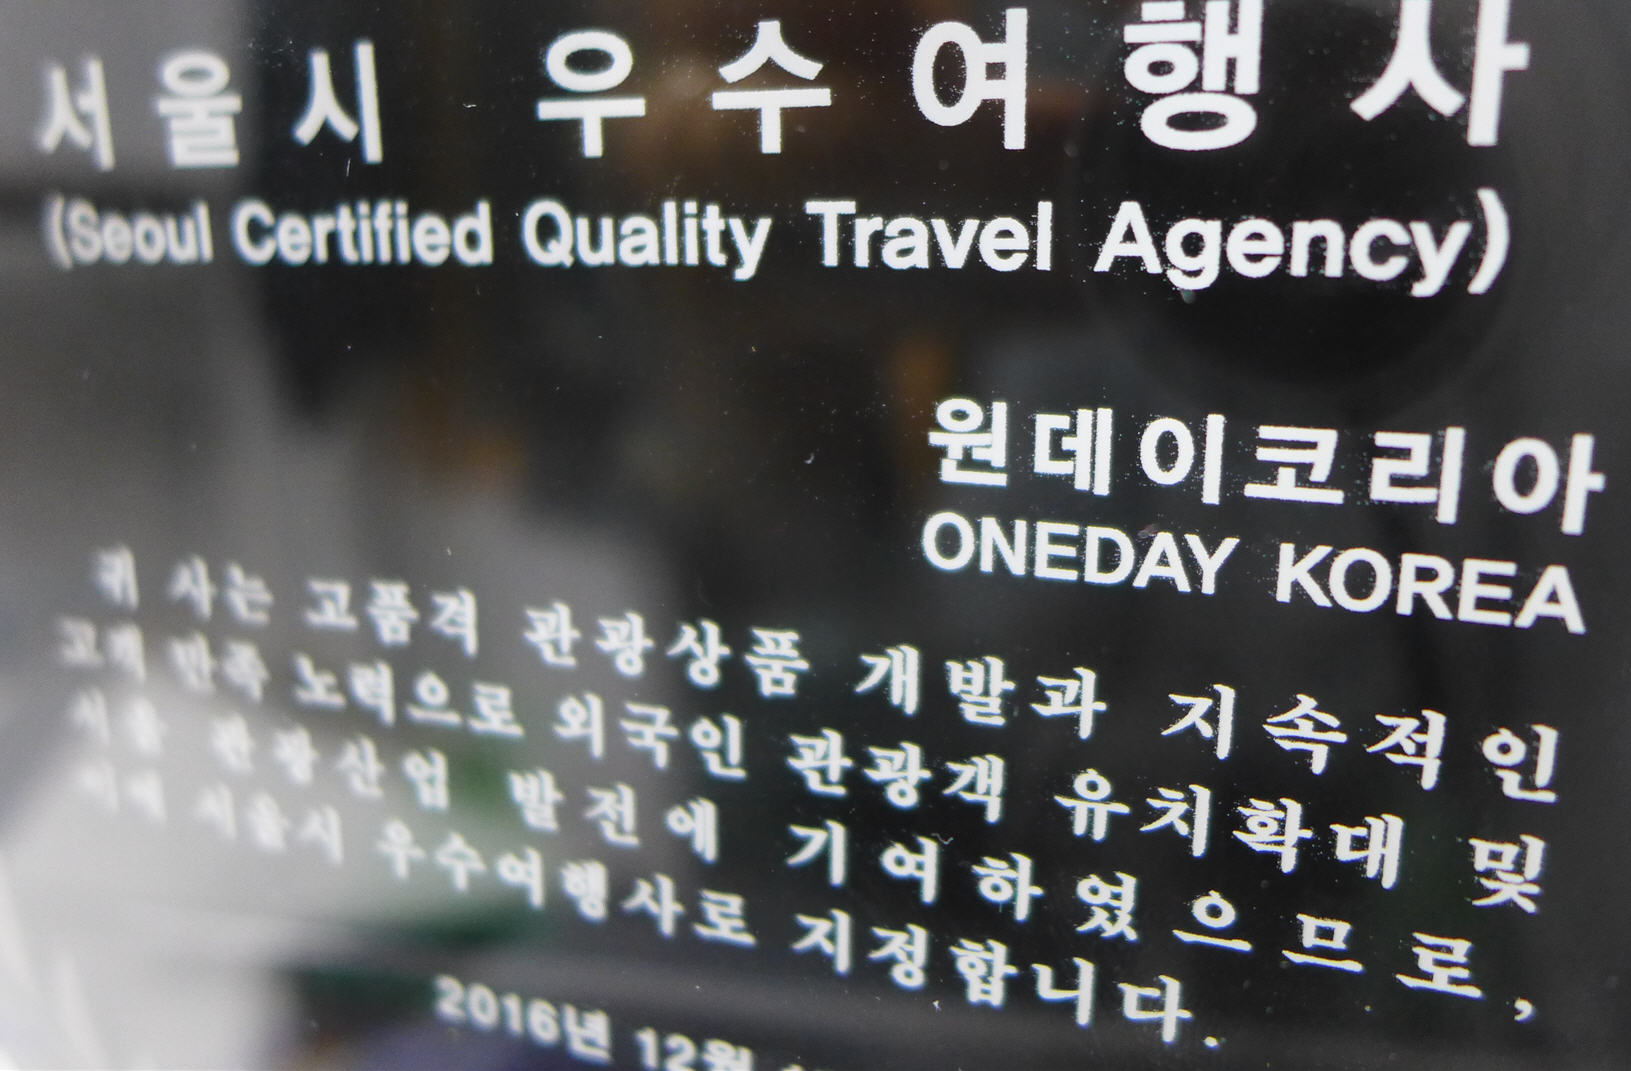 Seoul Best Travel Agency